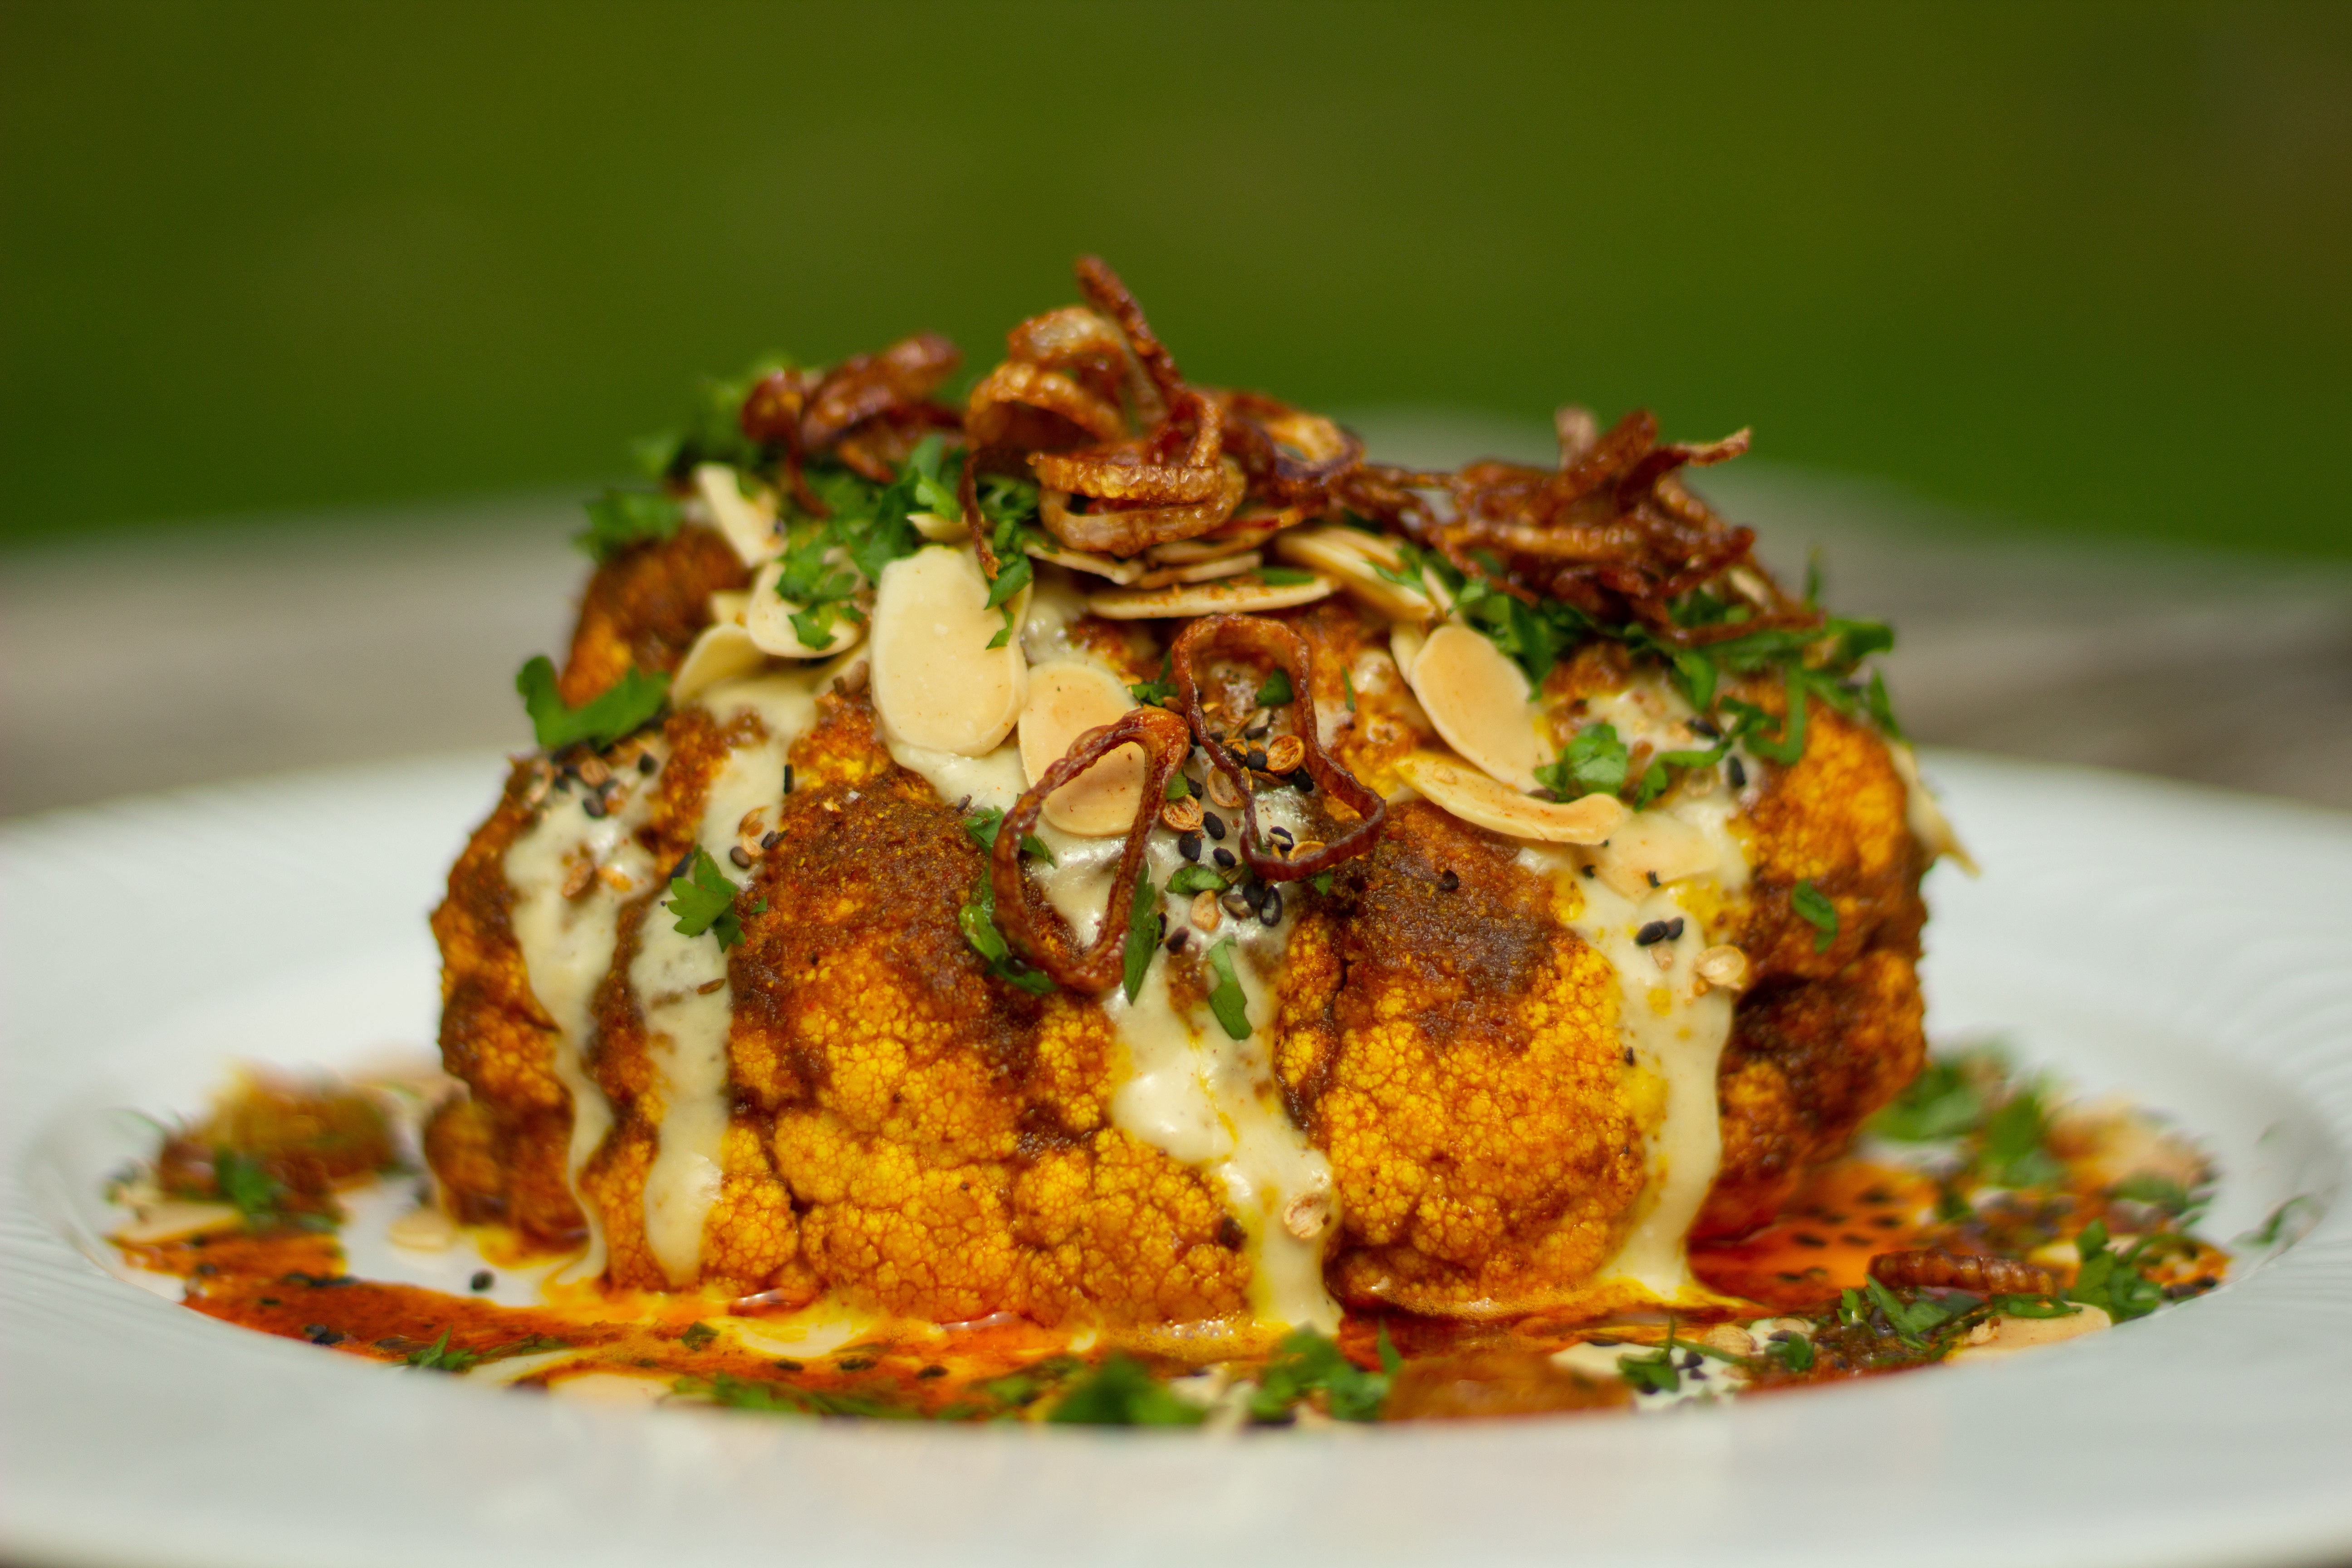 Tuesday - Roasted Cauliflower with Spiced Dukkah